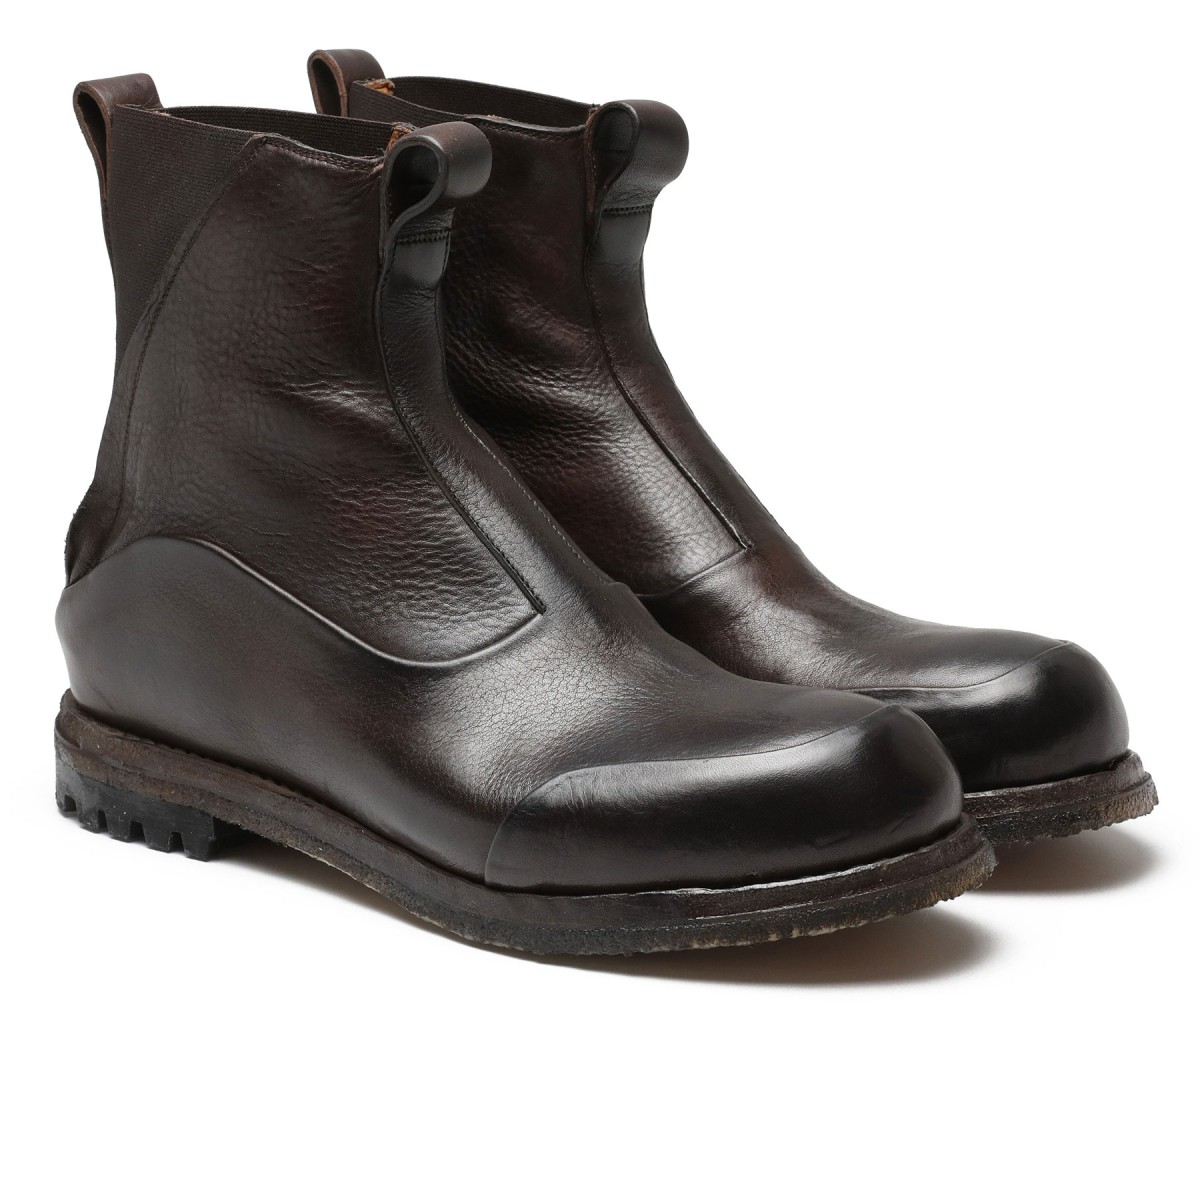 Dark brown leather booties